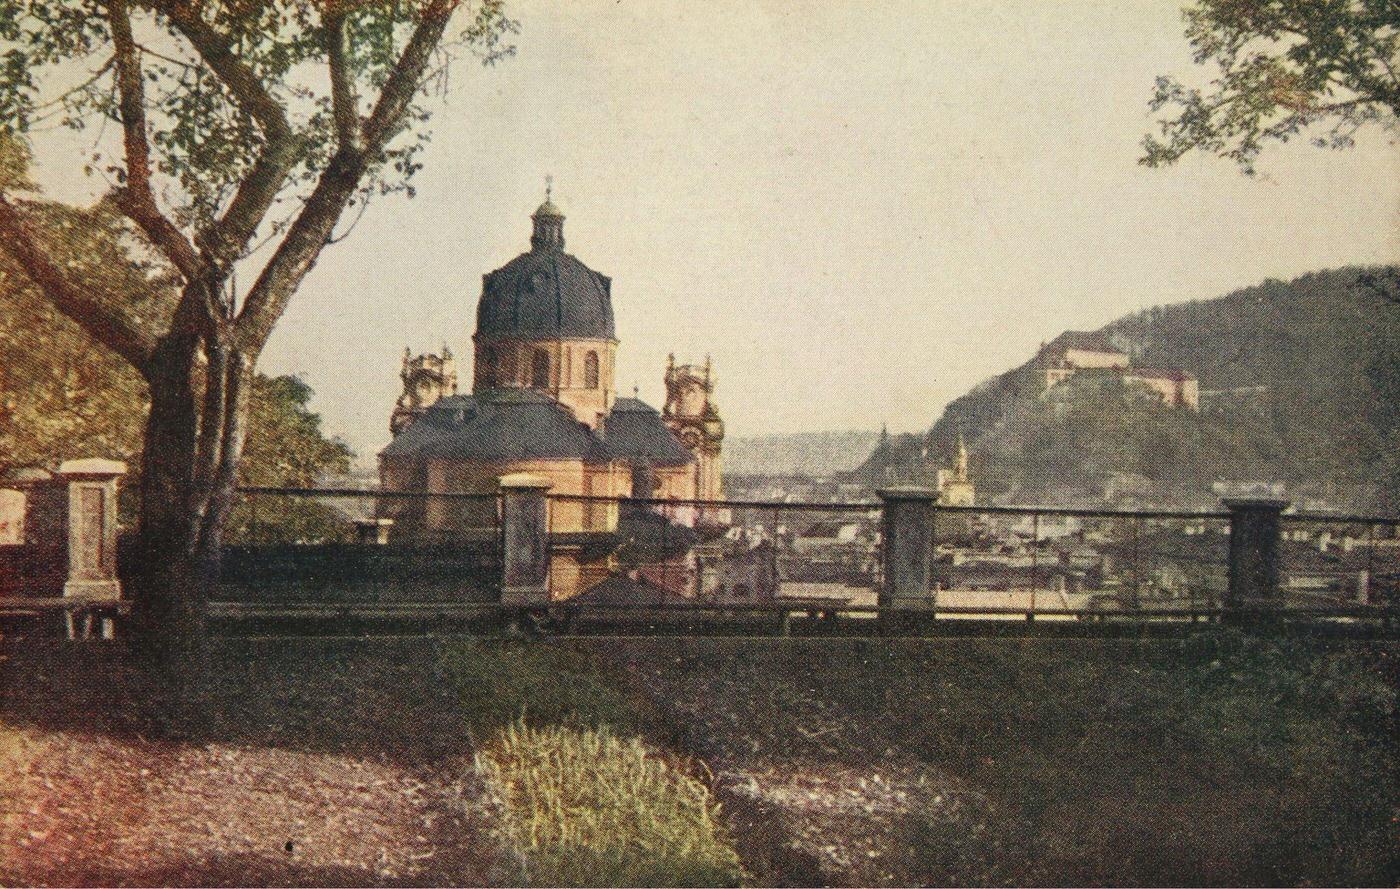 View of the University Church in Salzburg, around 1905.